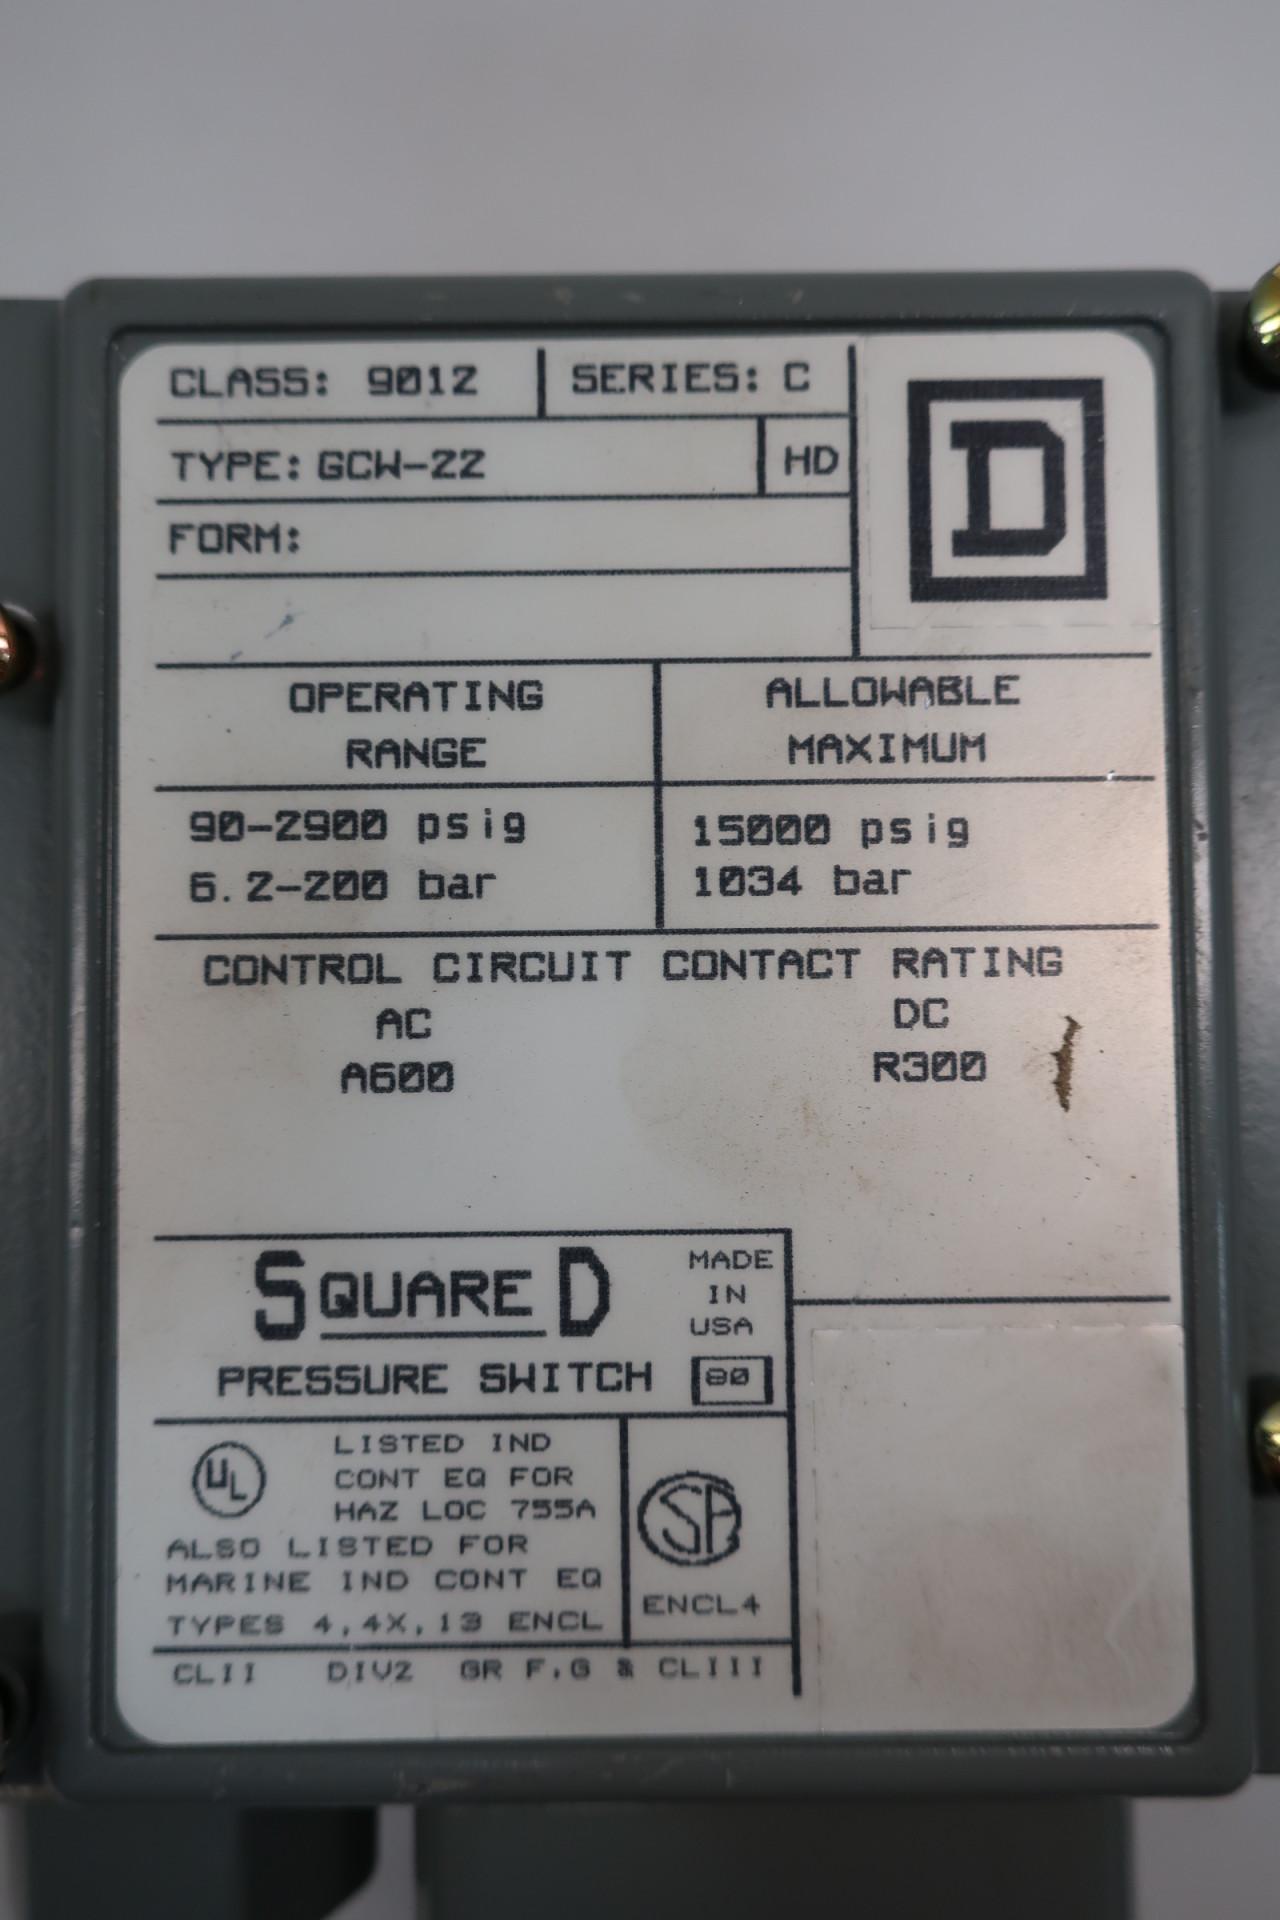 Square D 9012 GCW-2 pression Switch 90-2900psi 600v-ac 